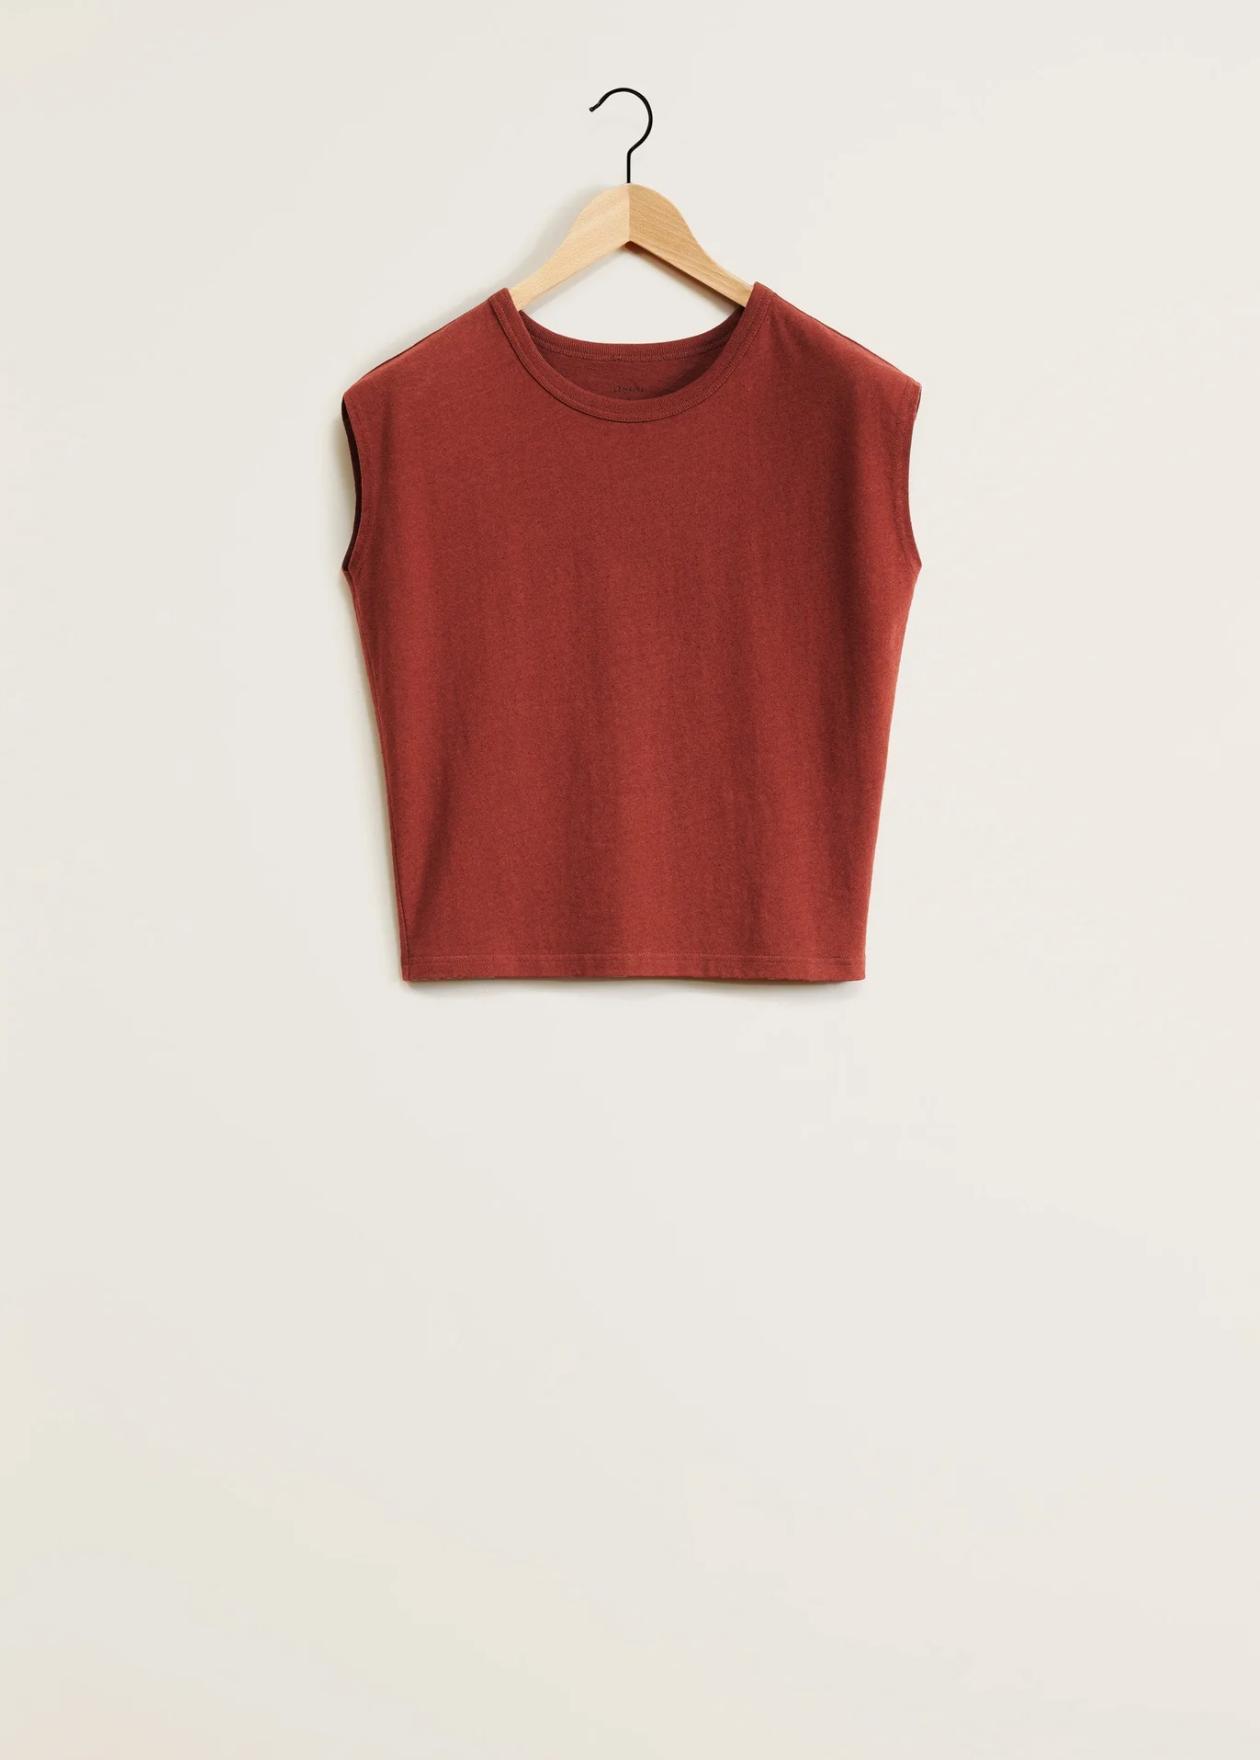 Cap Sleeve T-Shirt Knitted Cherry Mahogany